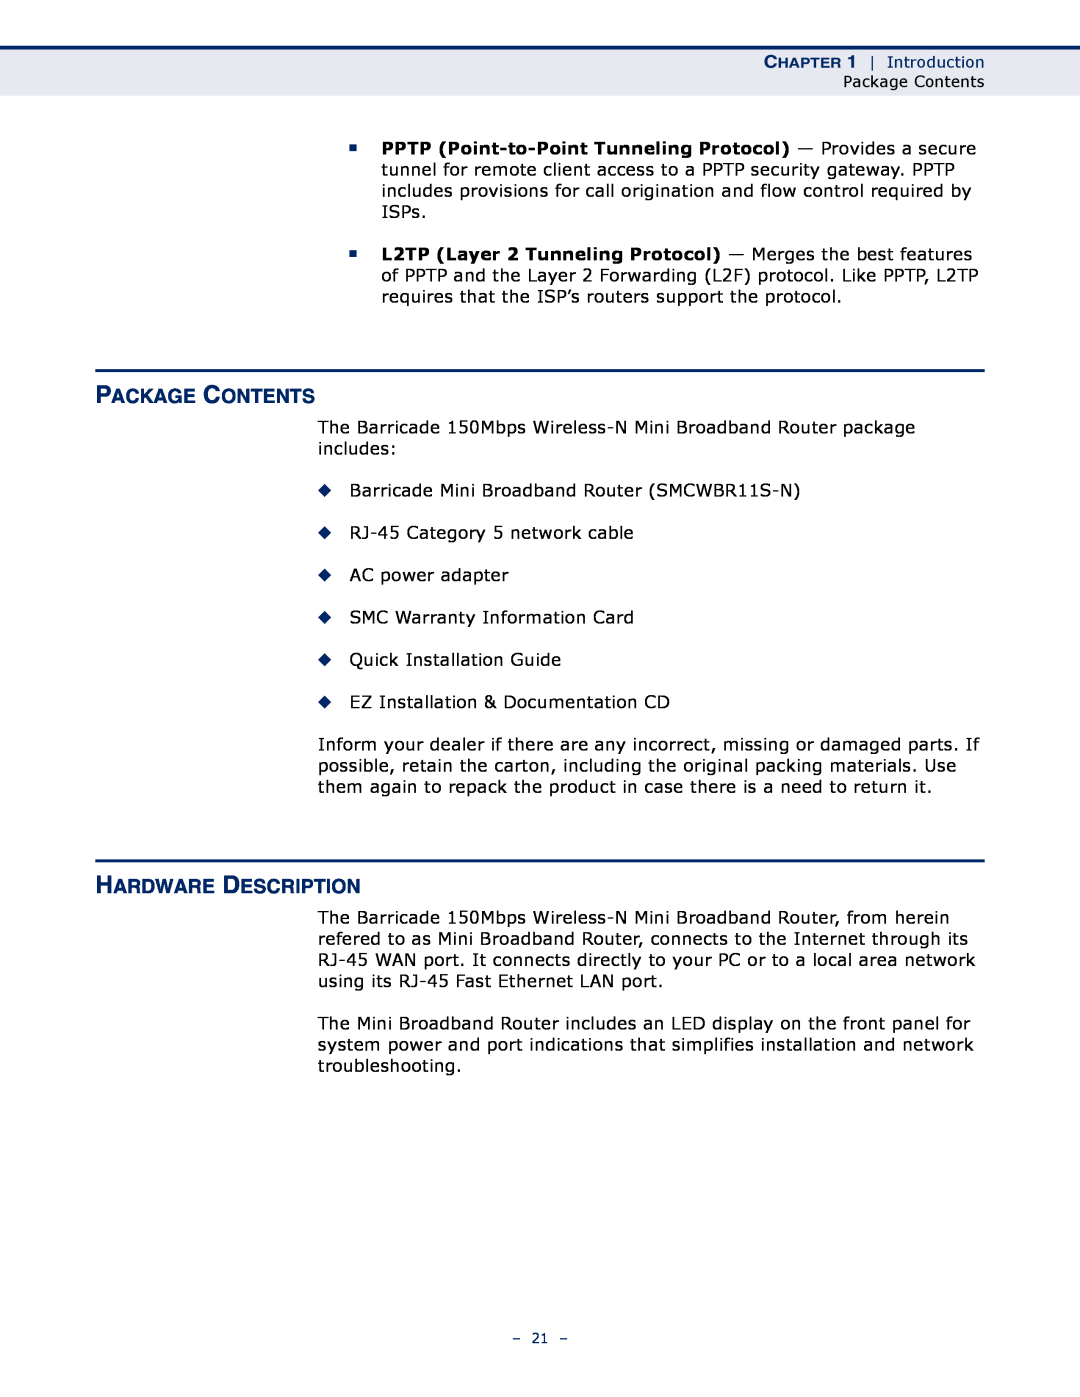 SMC Networks SMCWBR11S-N manual Package Contents, Hardware Description 